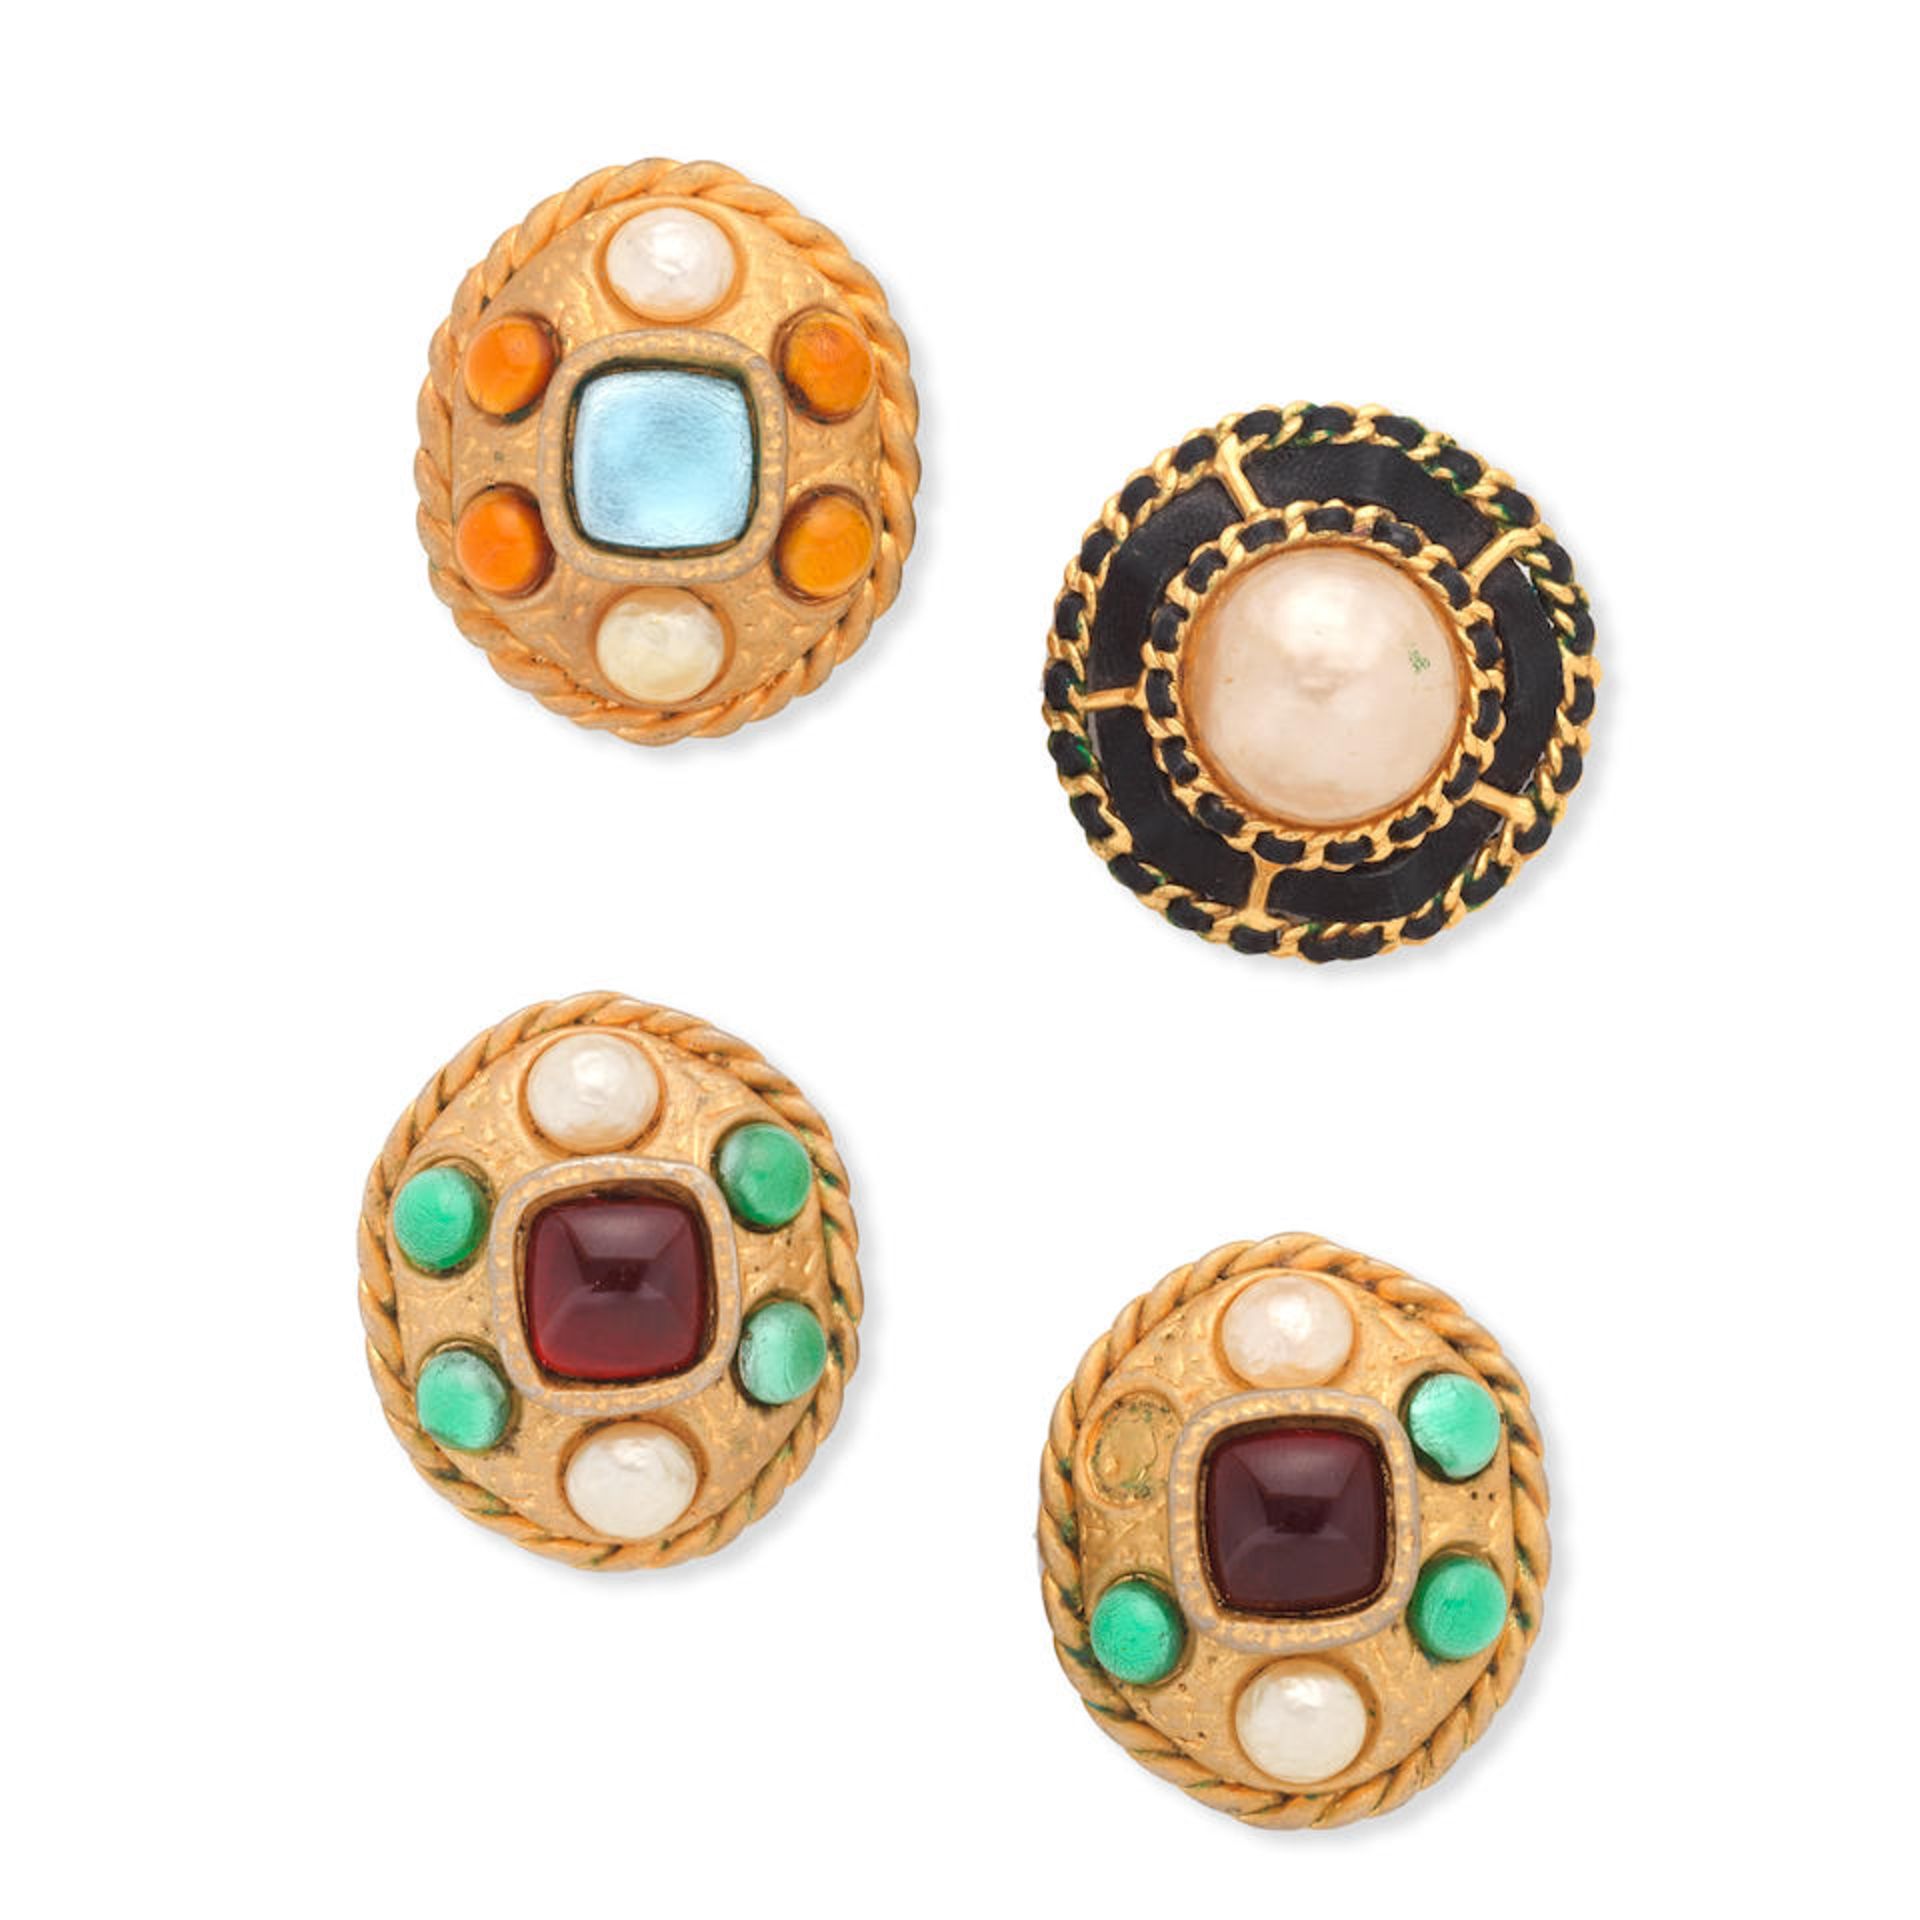 Victoire de Castellane for Chanel: a Pair of Gripoix Clip Earrings Collection 26, Autumn/Winter ...